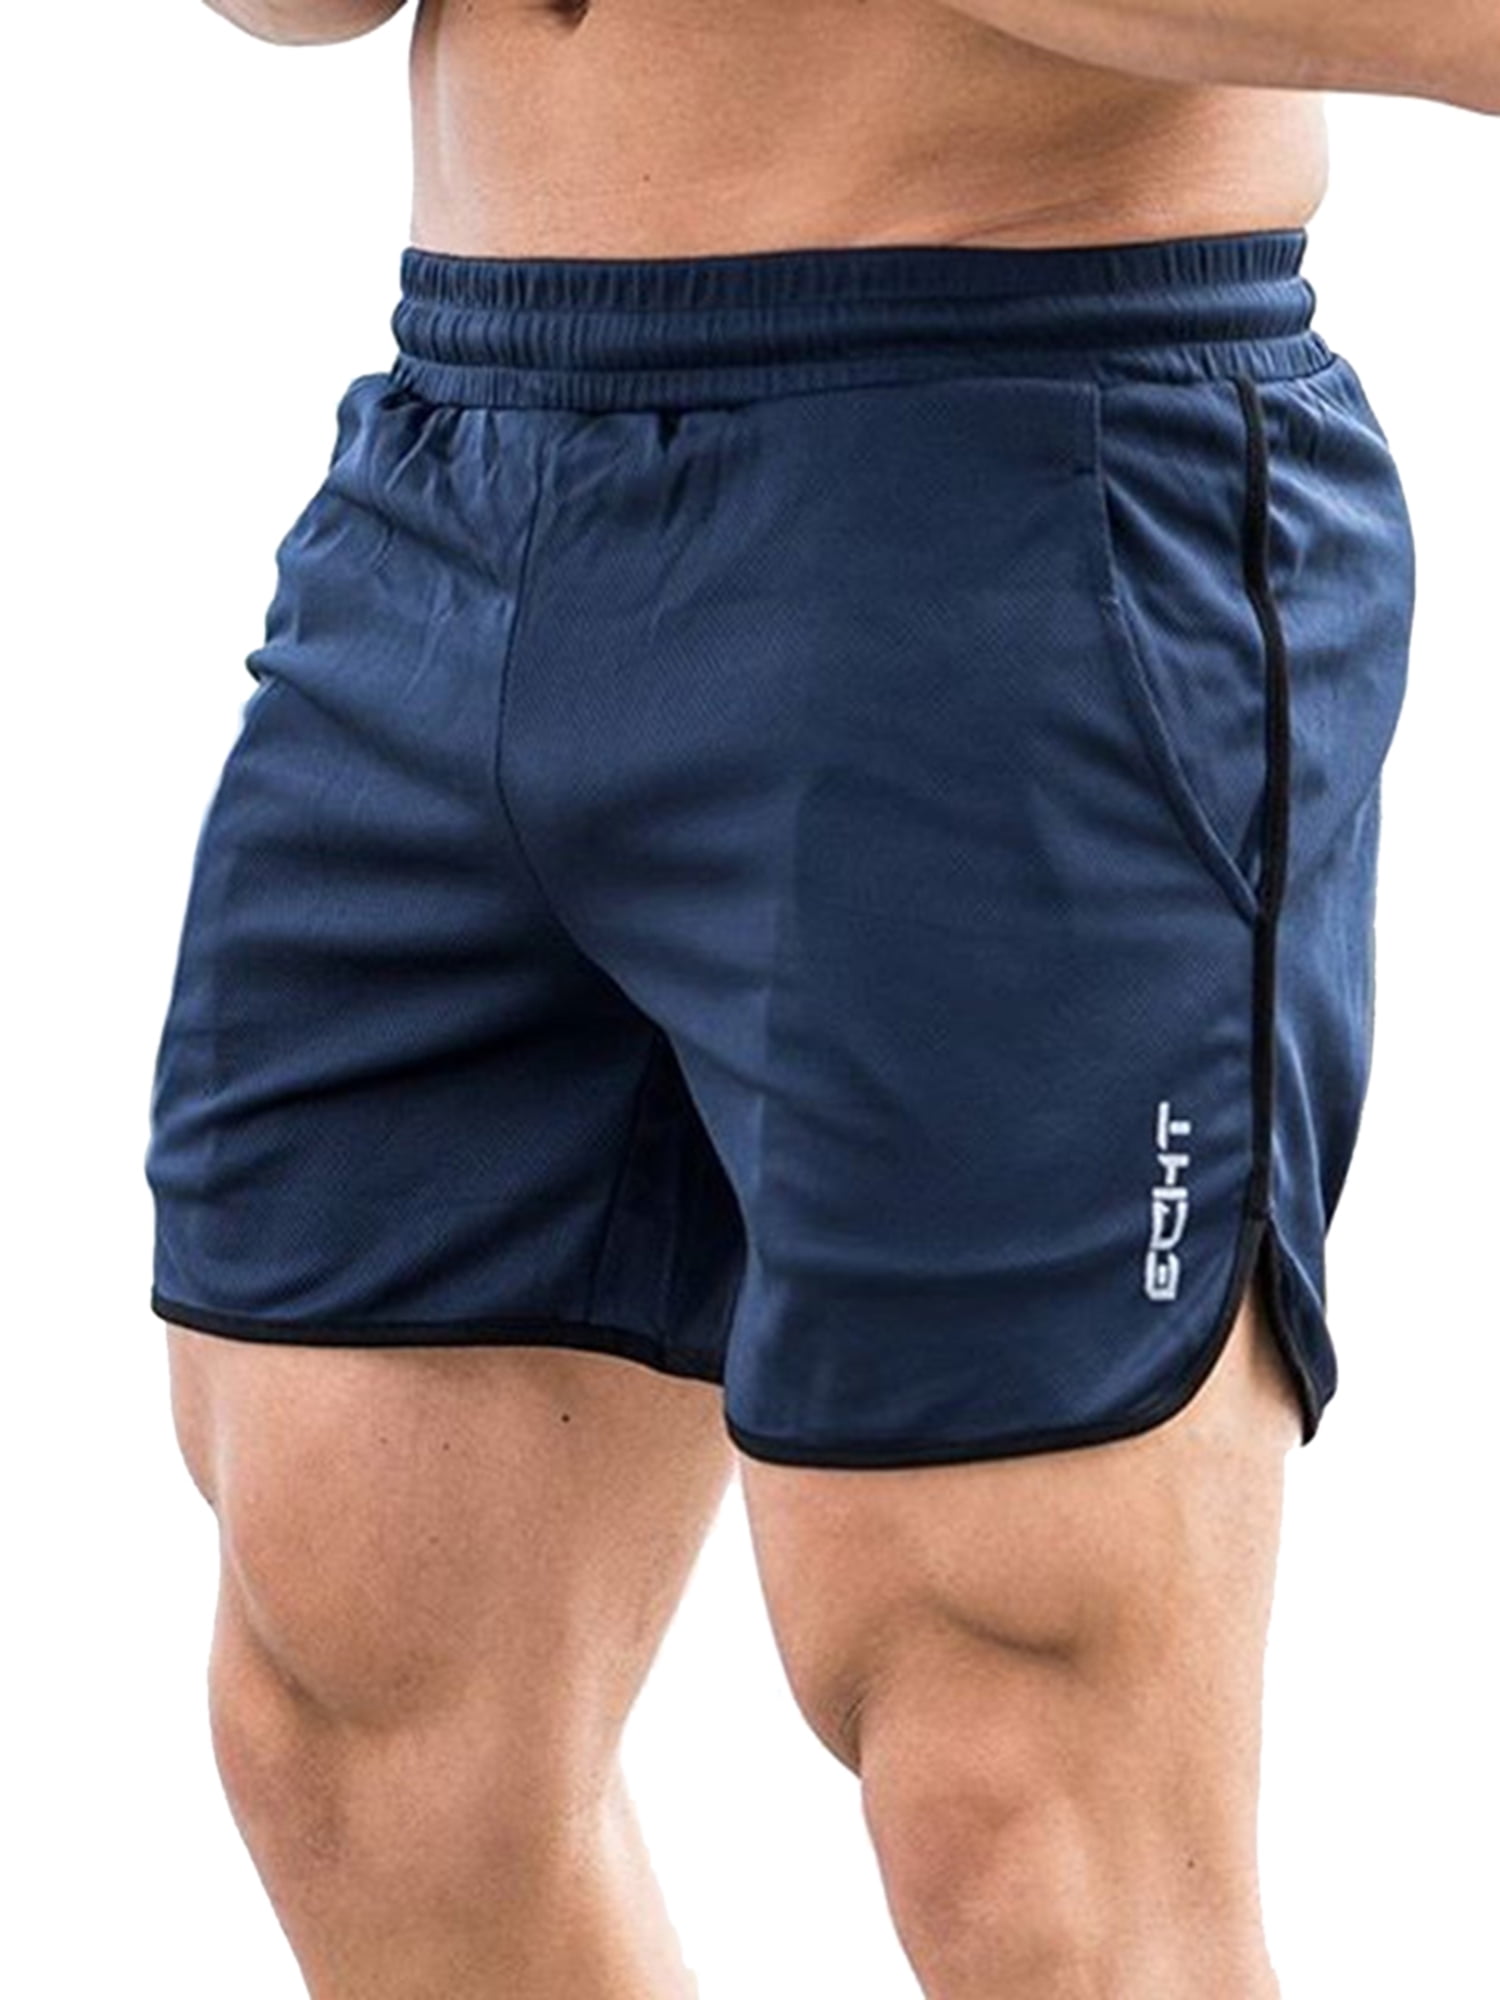 Prostar professional school gym Sport KIEV  Shorts boys/ mens Black 30/32 waist. 